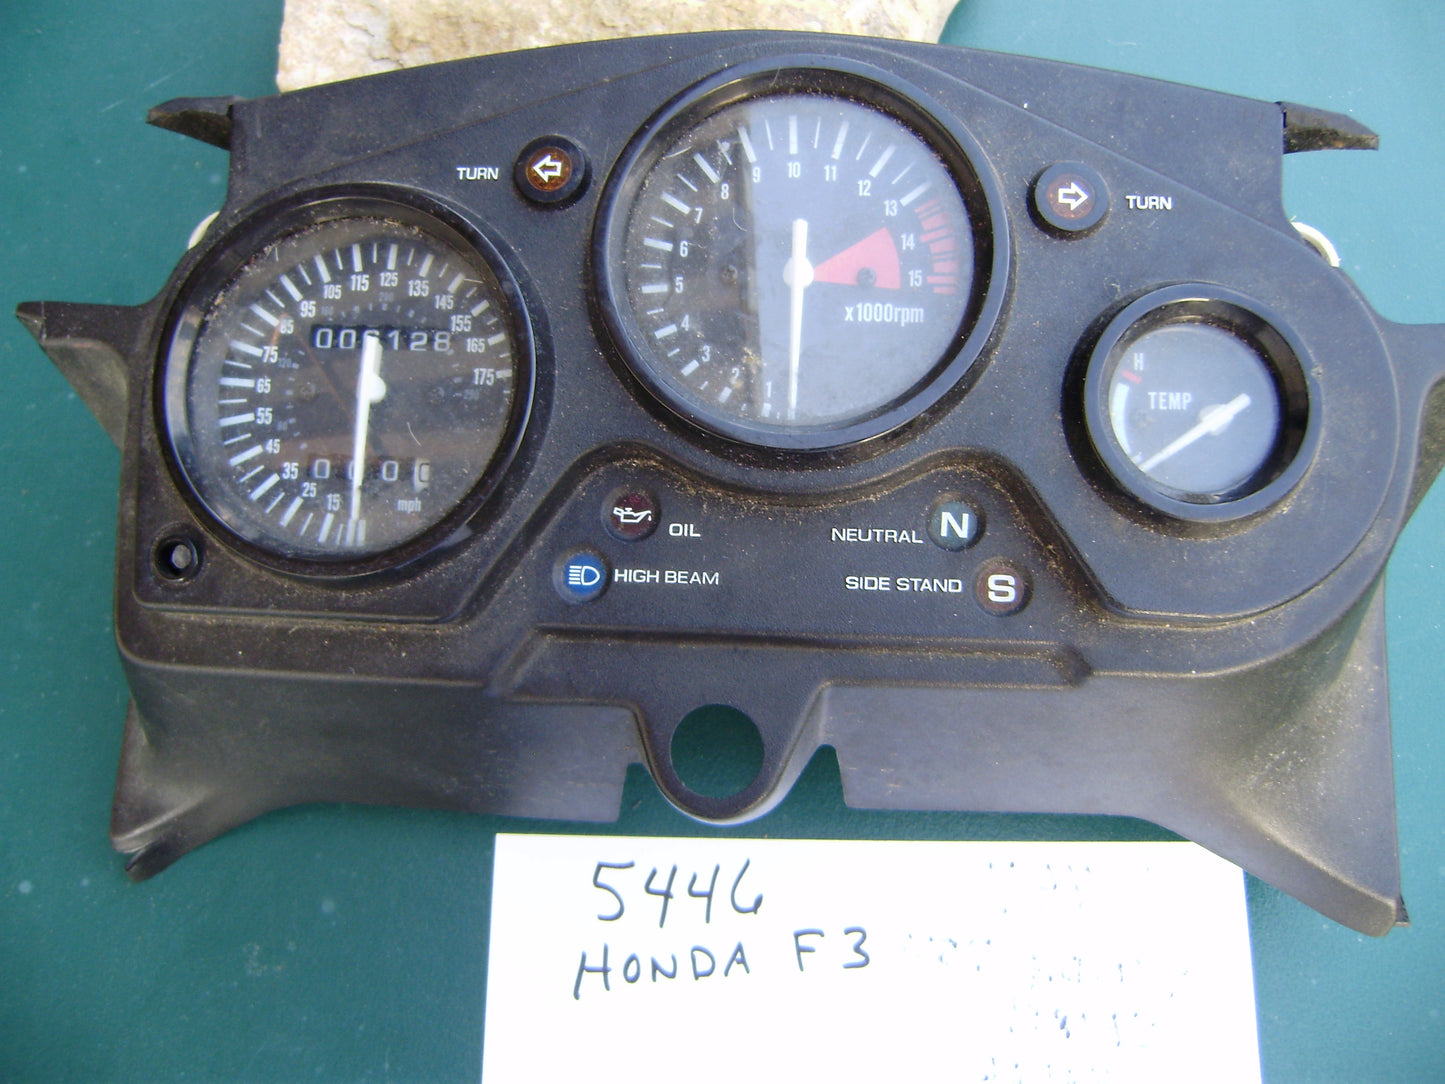 Sold Ebay 9/19/18 Honda CBR600F3 Instrument Cluster Assembly 6128 Miles sku 5446